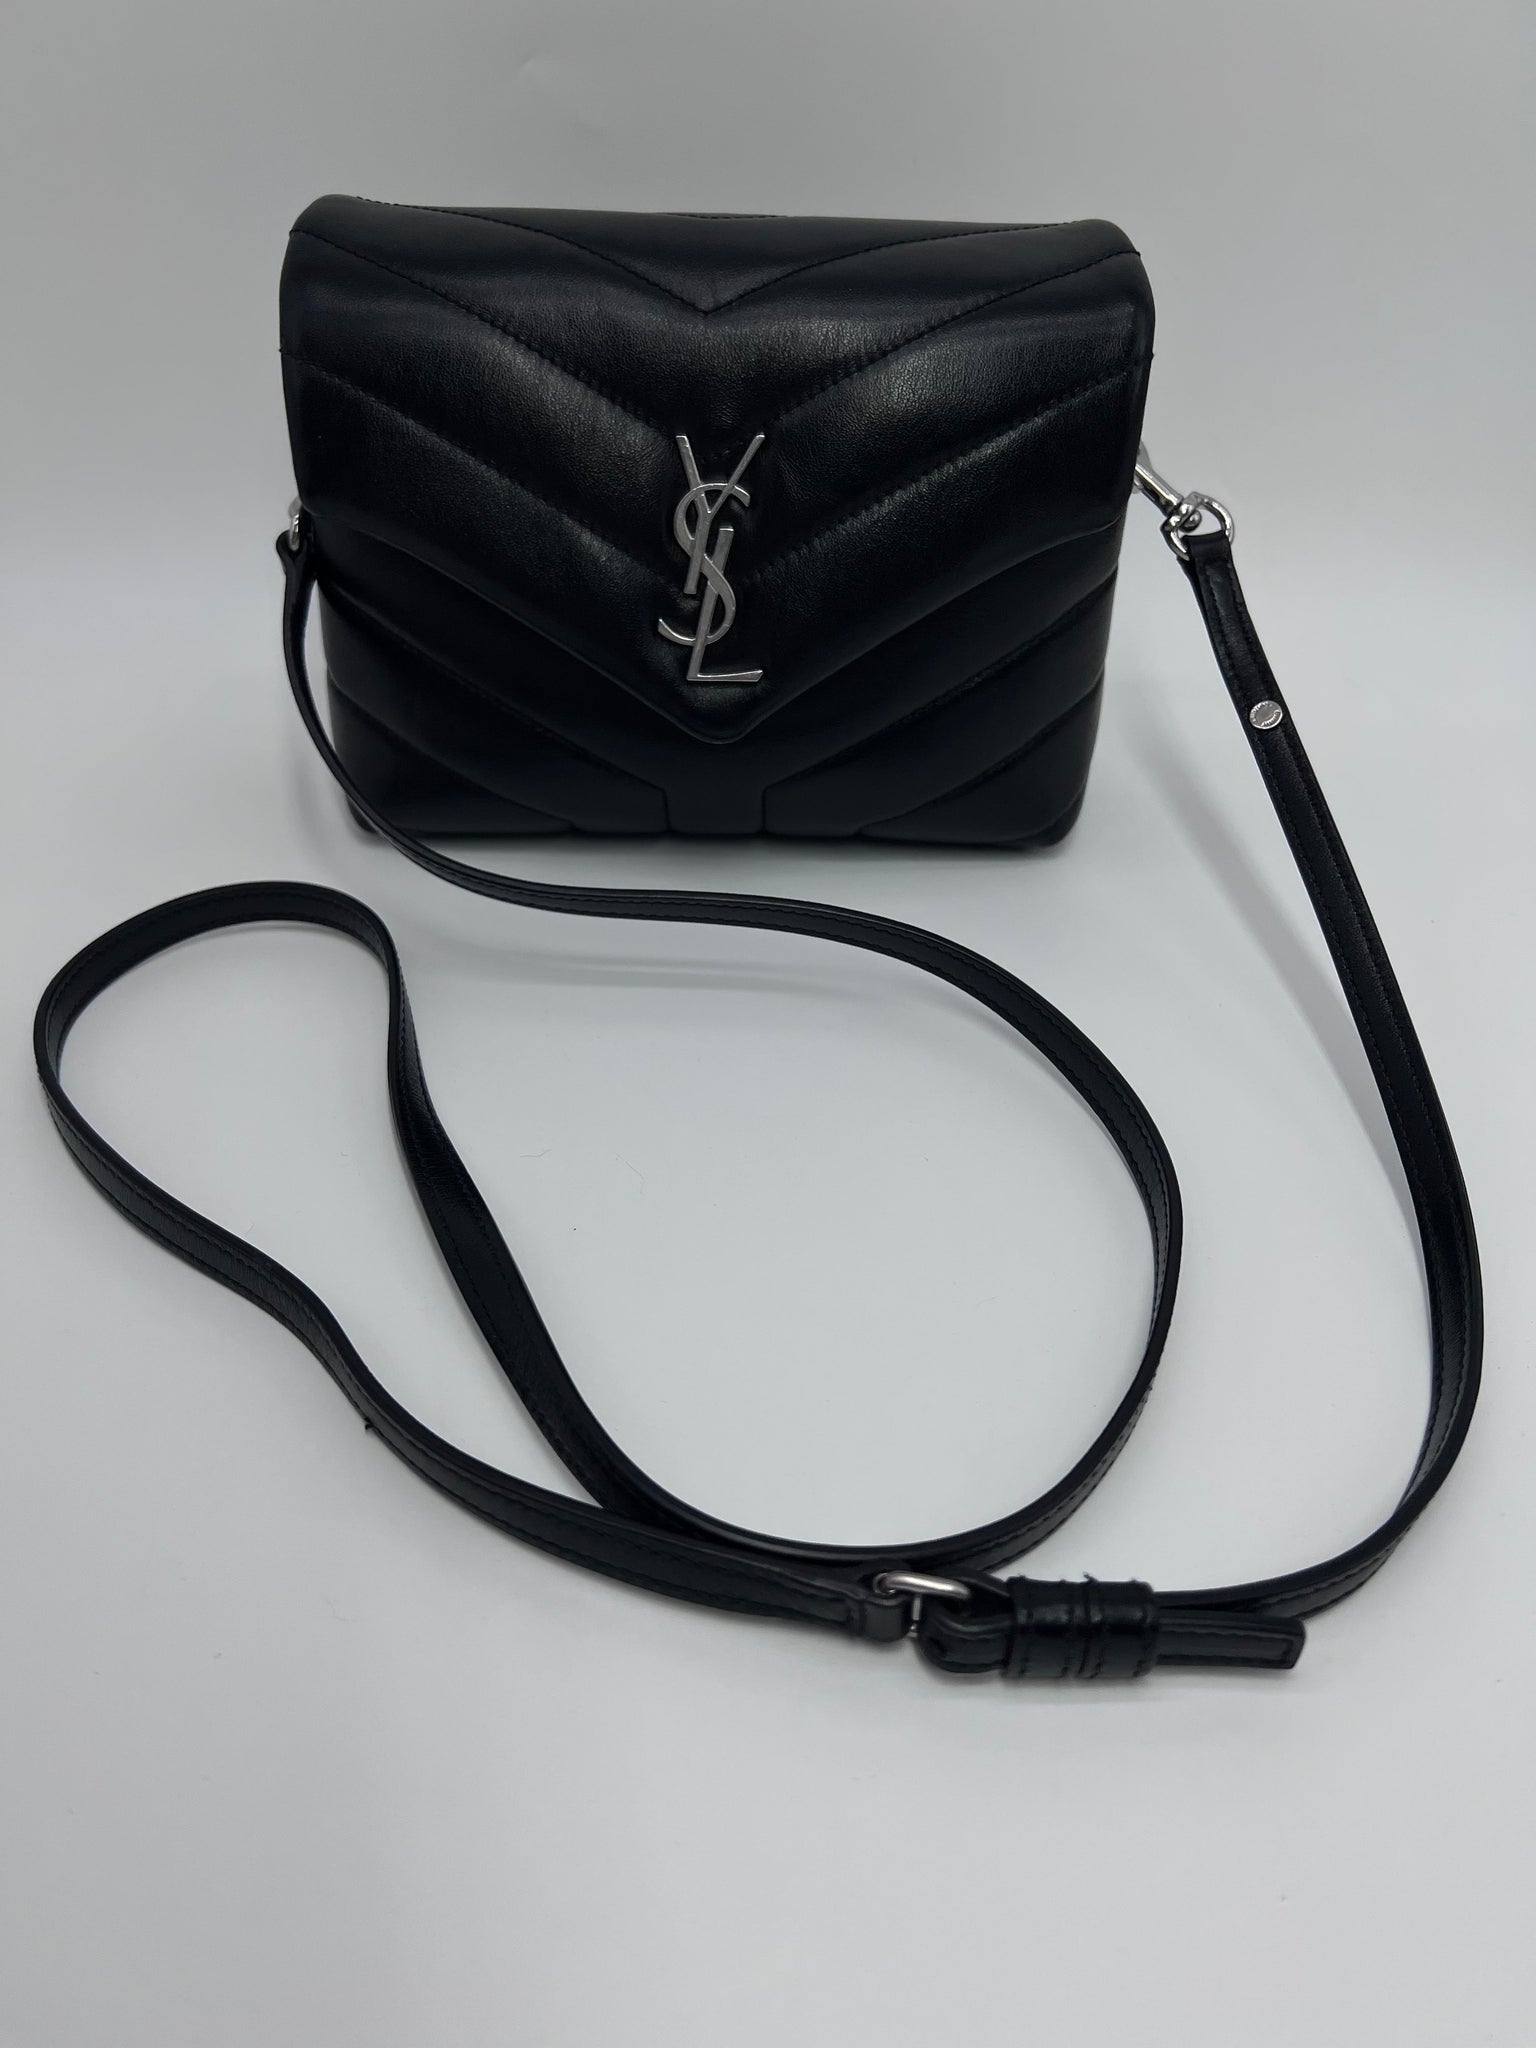 Ysl Black Toy Loulou Bag